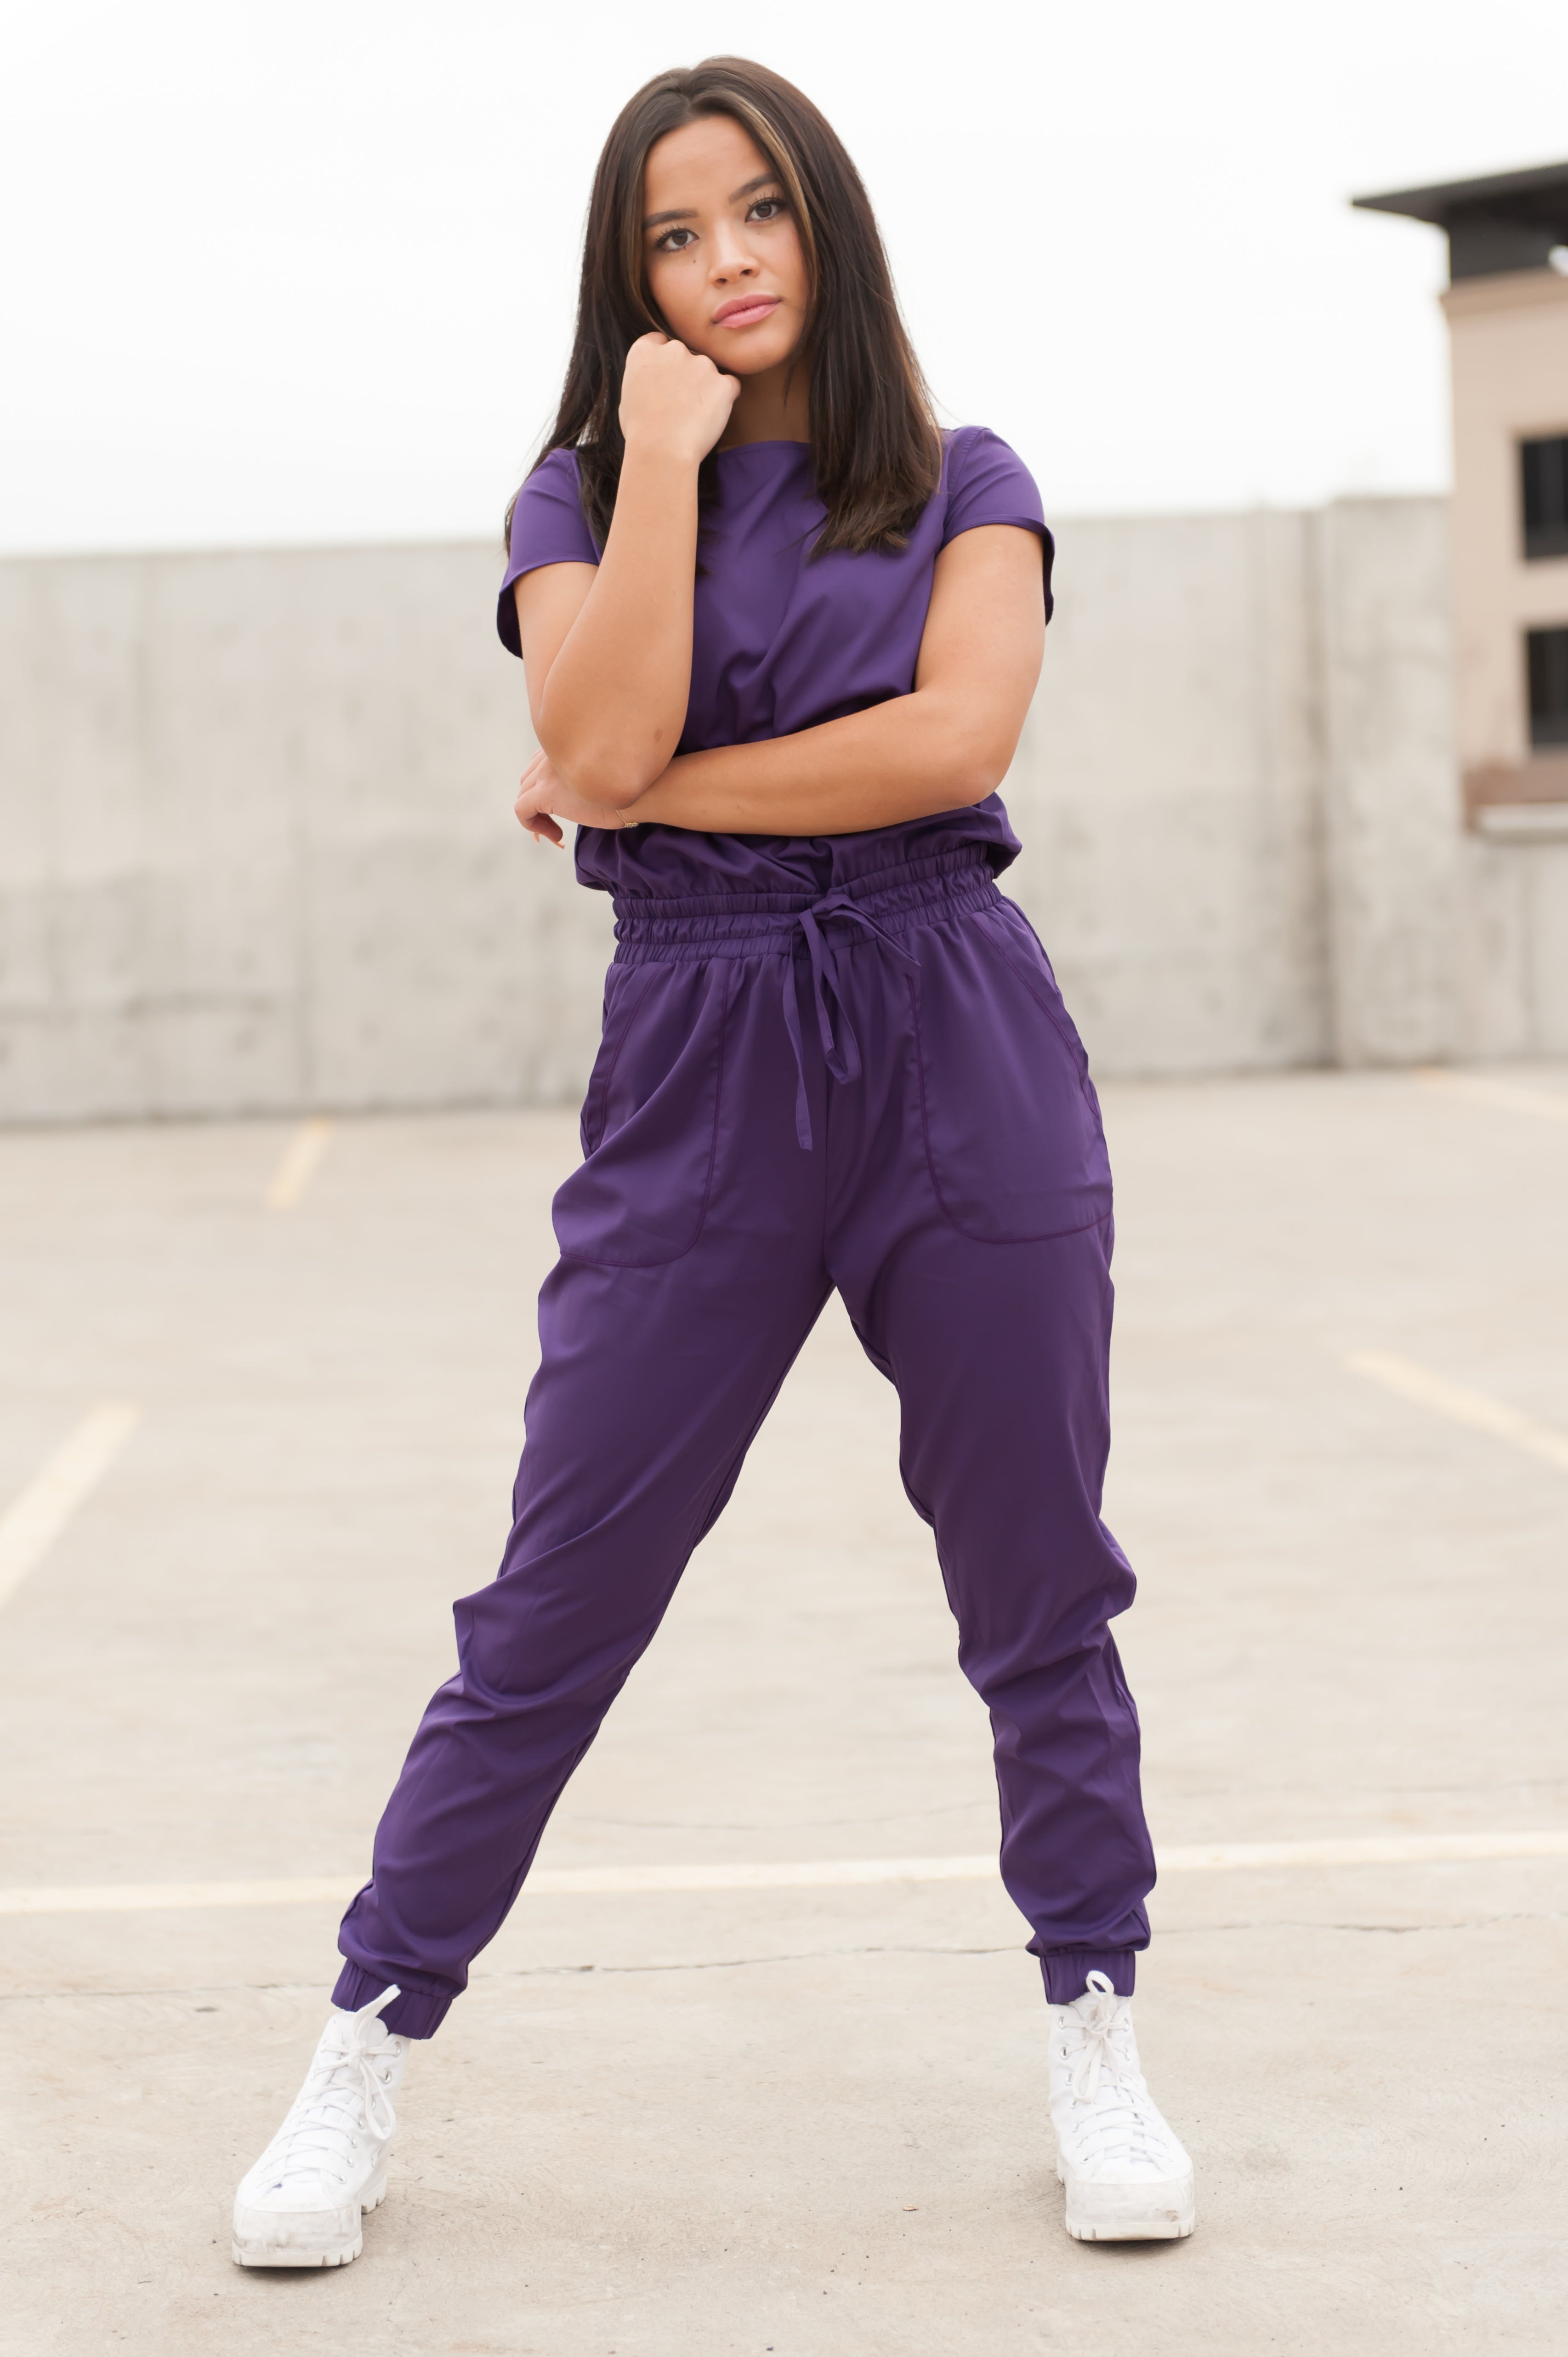 One-Piece Scrubsuit in Purple – The Scrub Suit